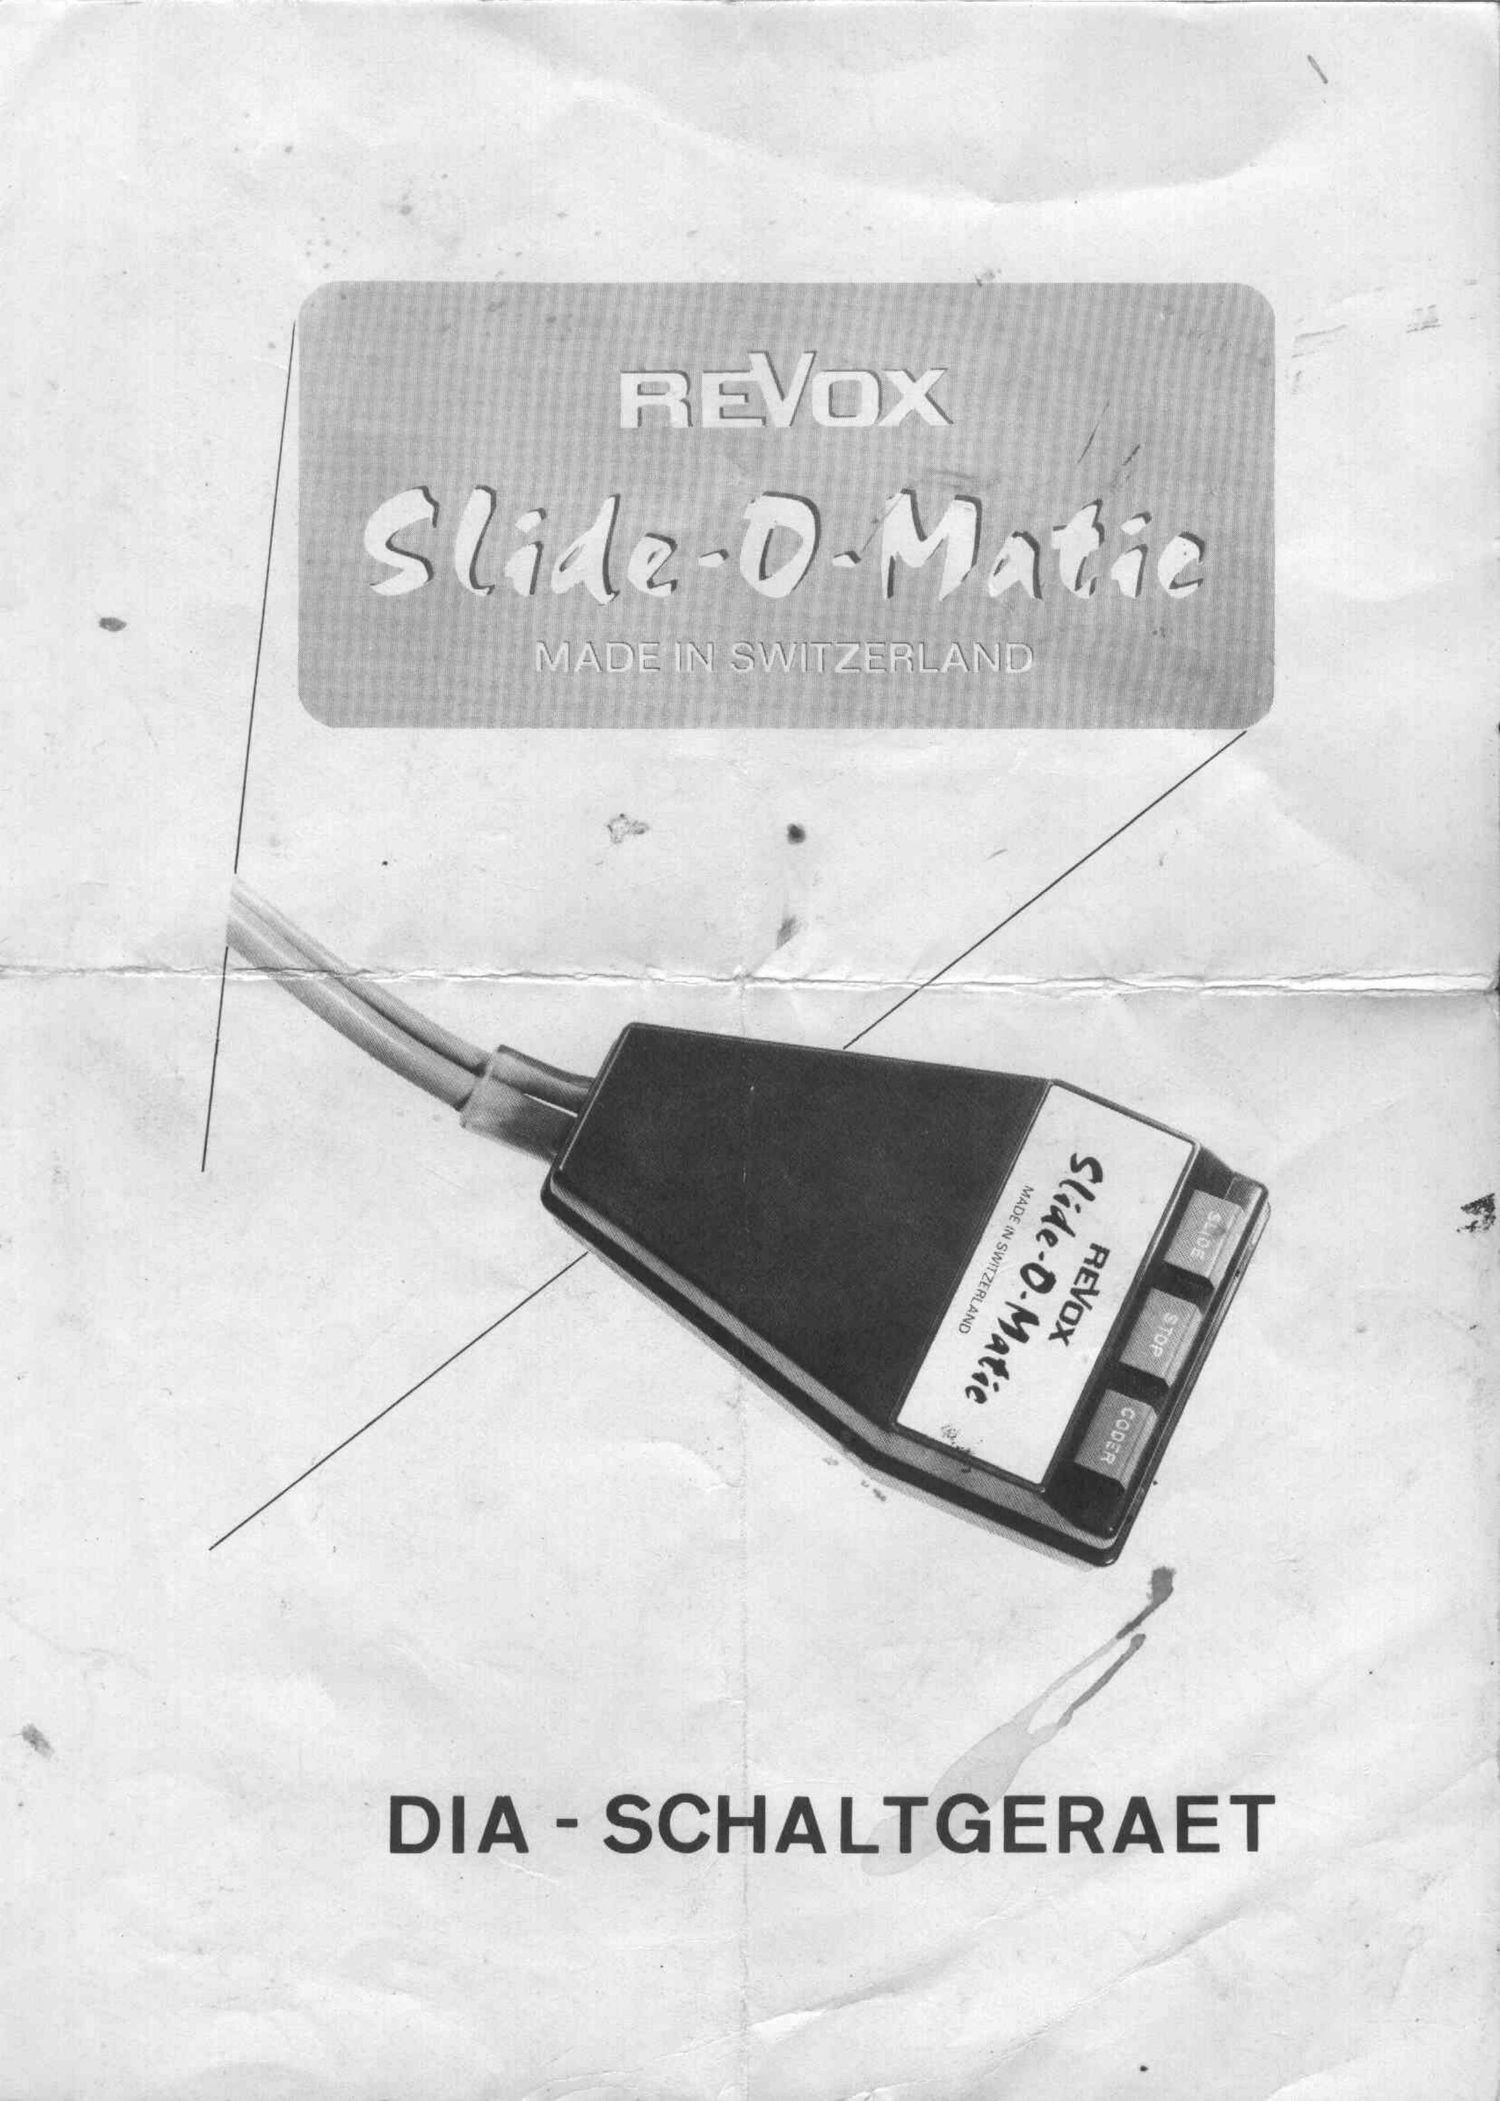 Revox Slide o matic Owners Manual